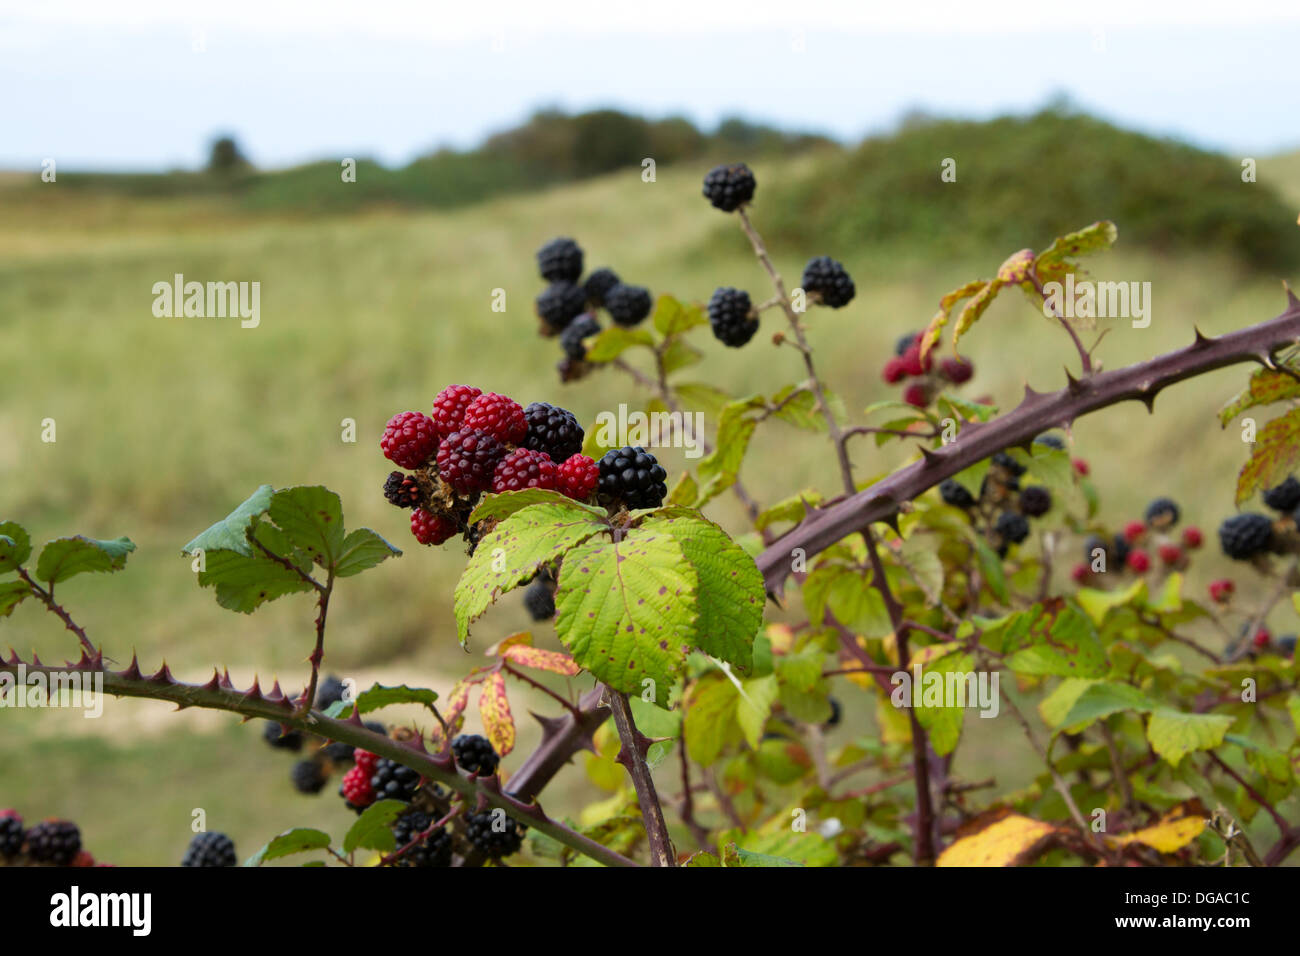 ripe and unripe Bramble berries (aka blackberries) in the sand dunes at Holkham Stock Photo